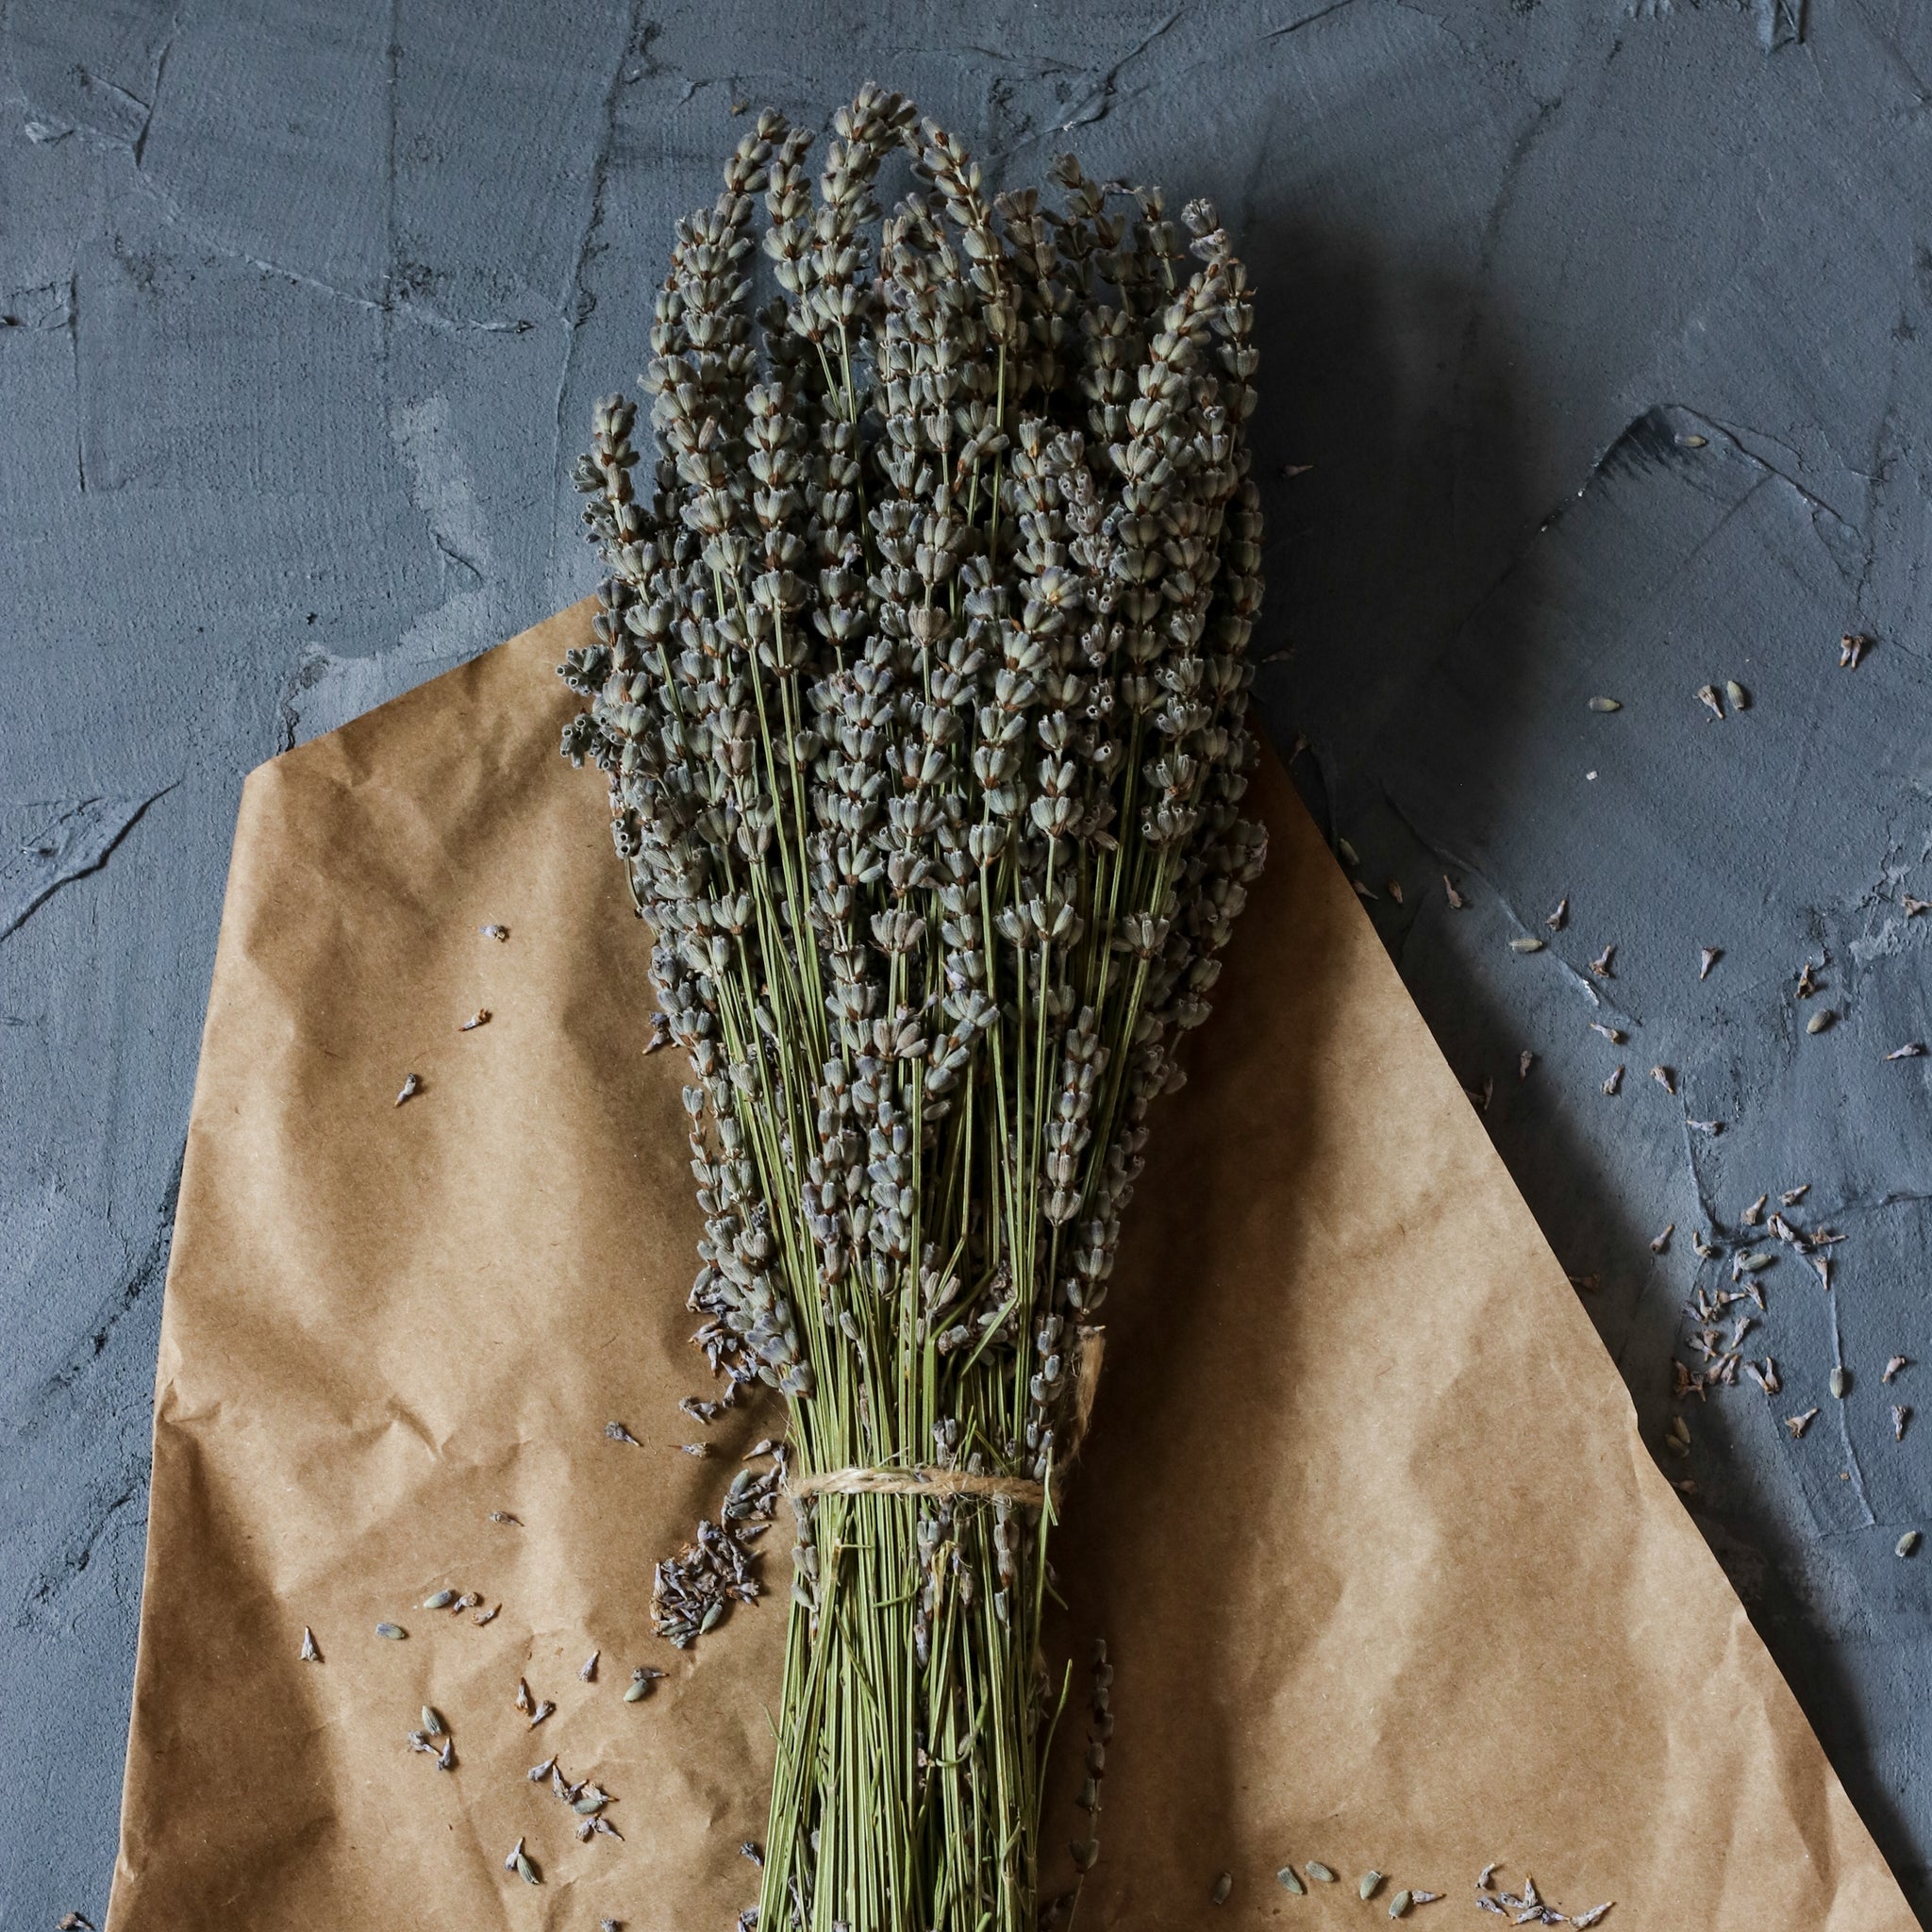 Dried Lavender Bouquet – Tumalo Lavender